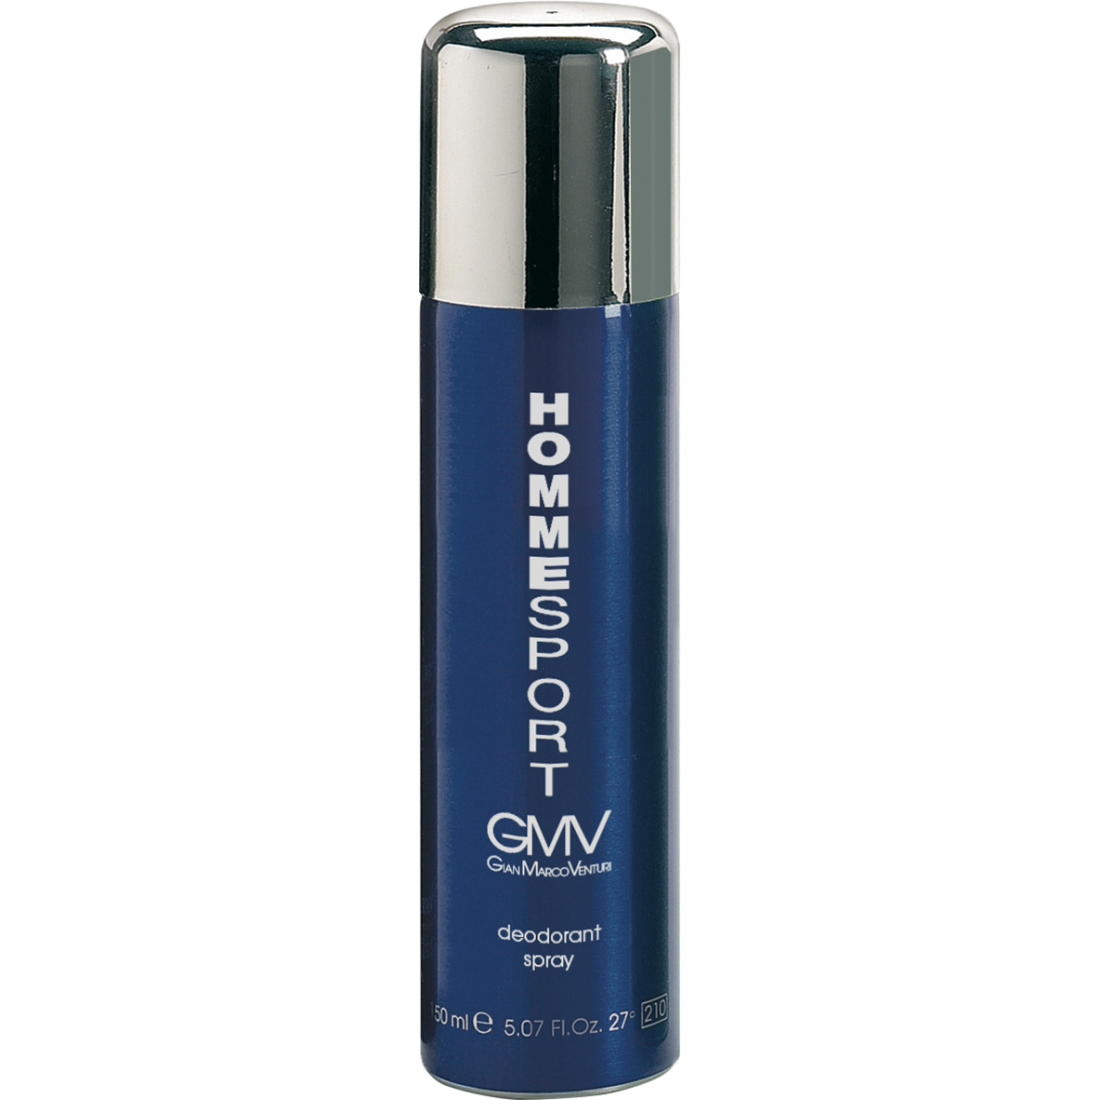 Gian Marco Venturi GMV Homme Sport Deodorant Spray